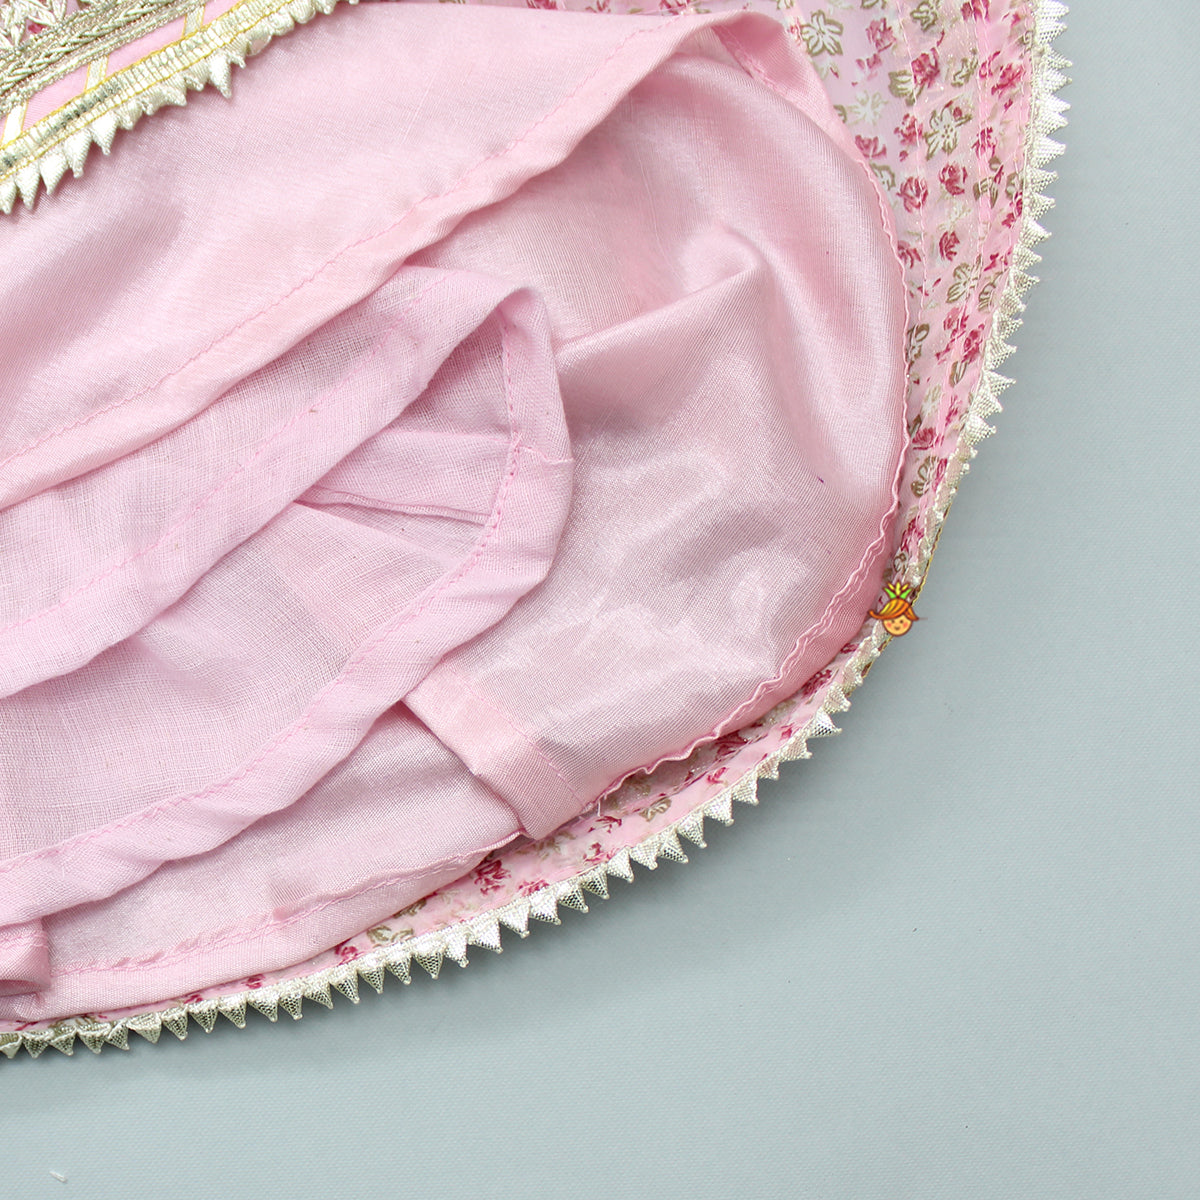 Gota Lace Work Printed Side Slit Baby Pink Kurti And Flared Lehenga With Matching Gota Flower Enhanced Dupatta